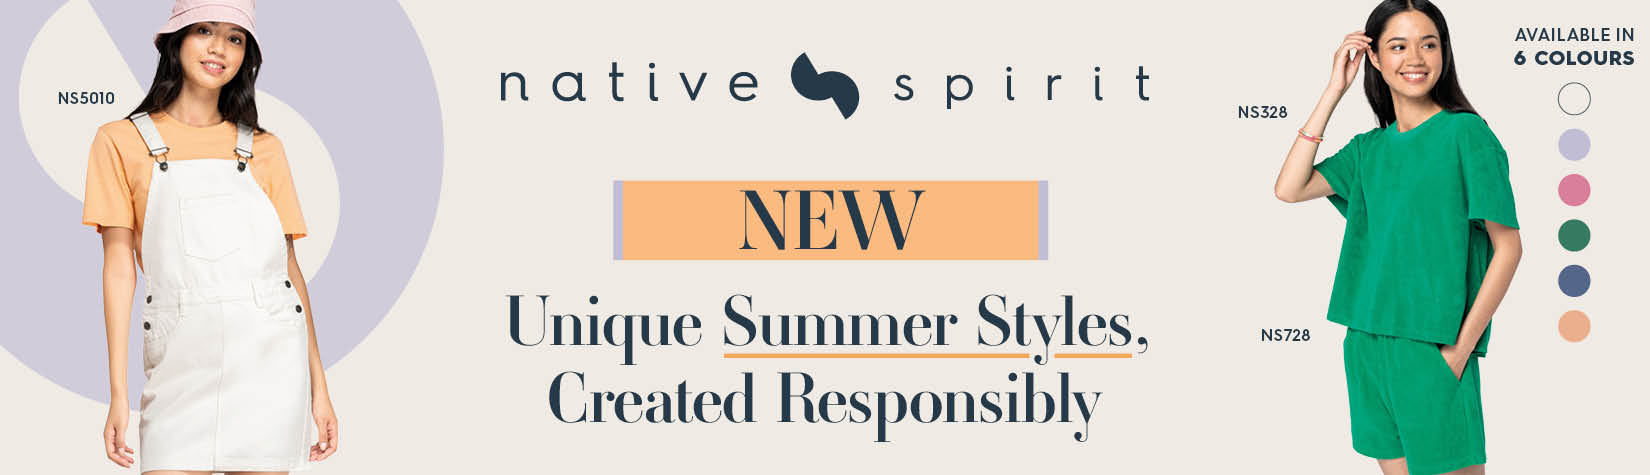 Native Spirit NEW summer styles